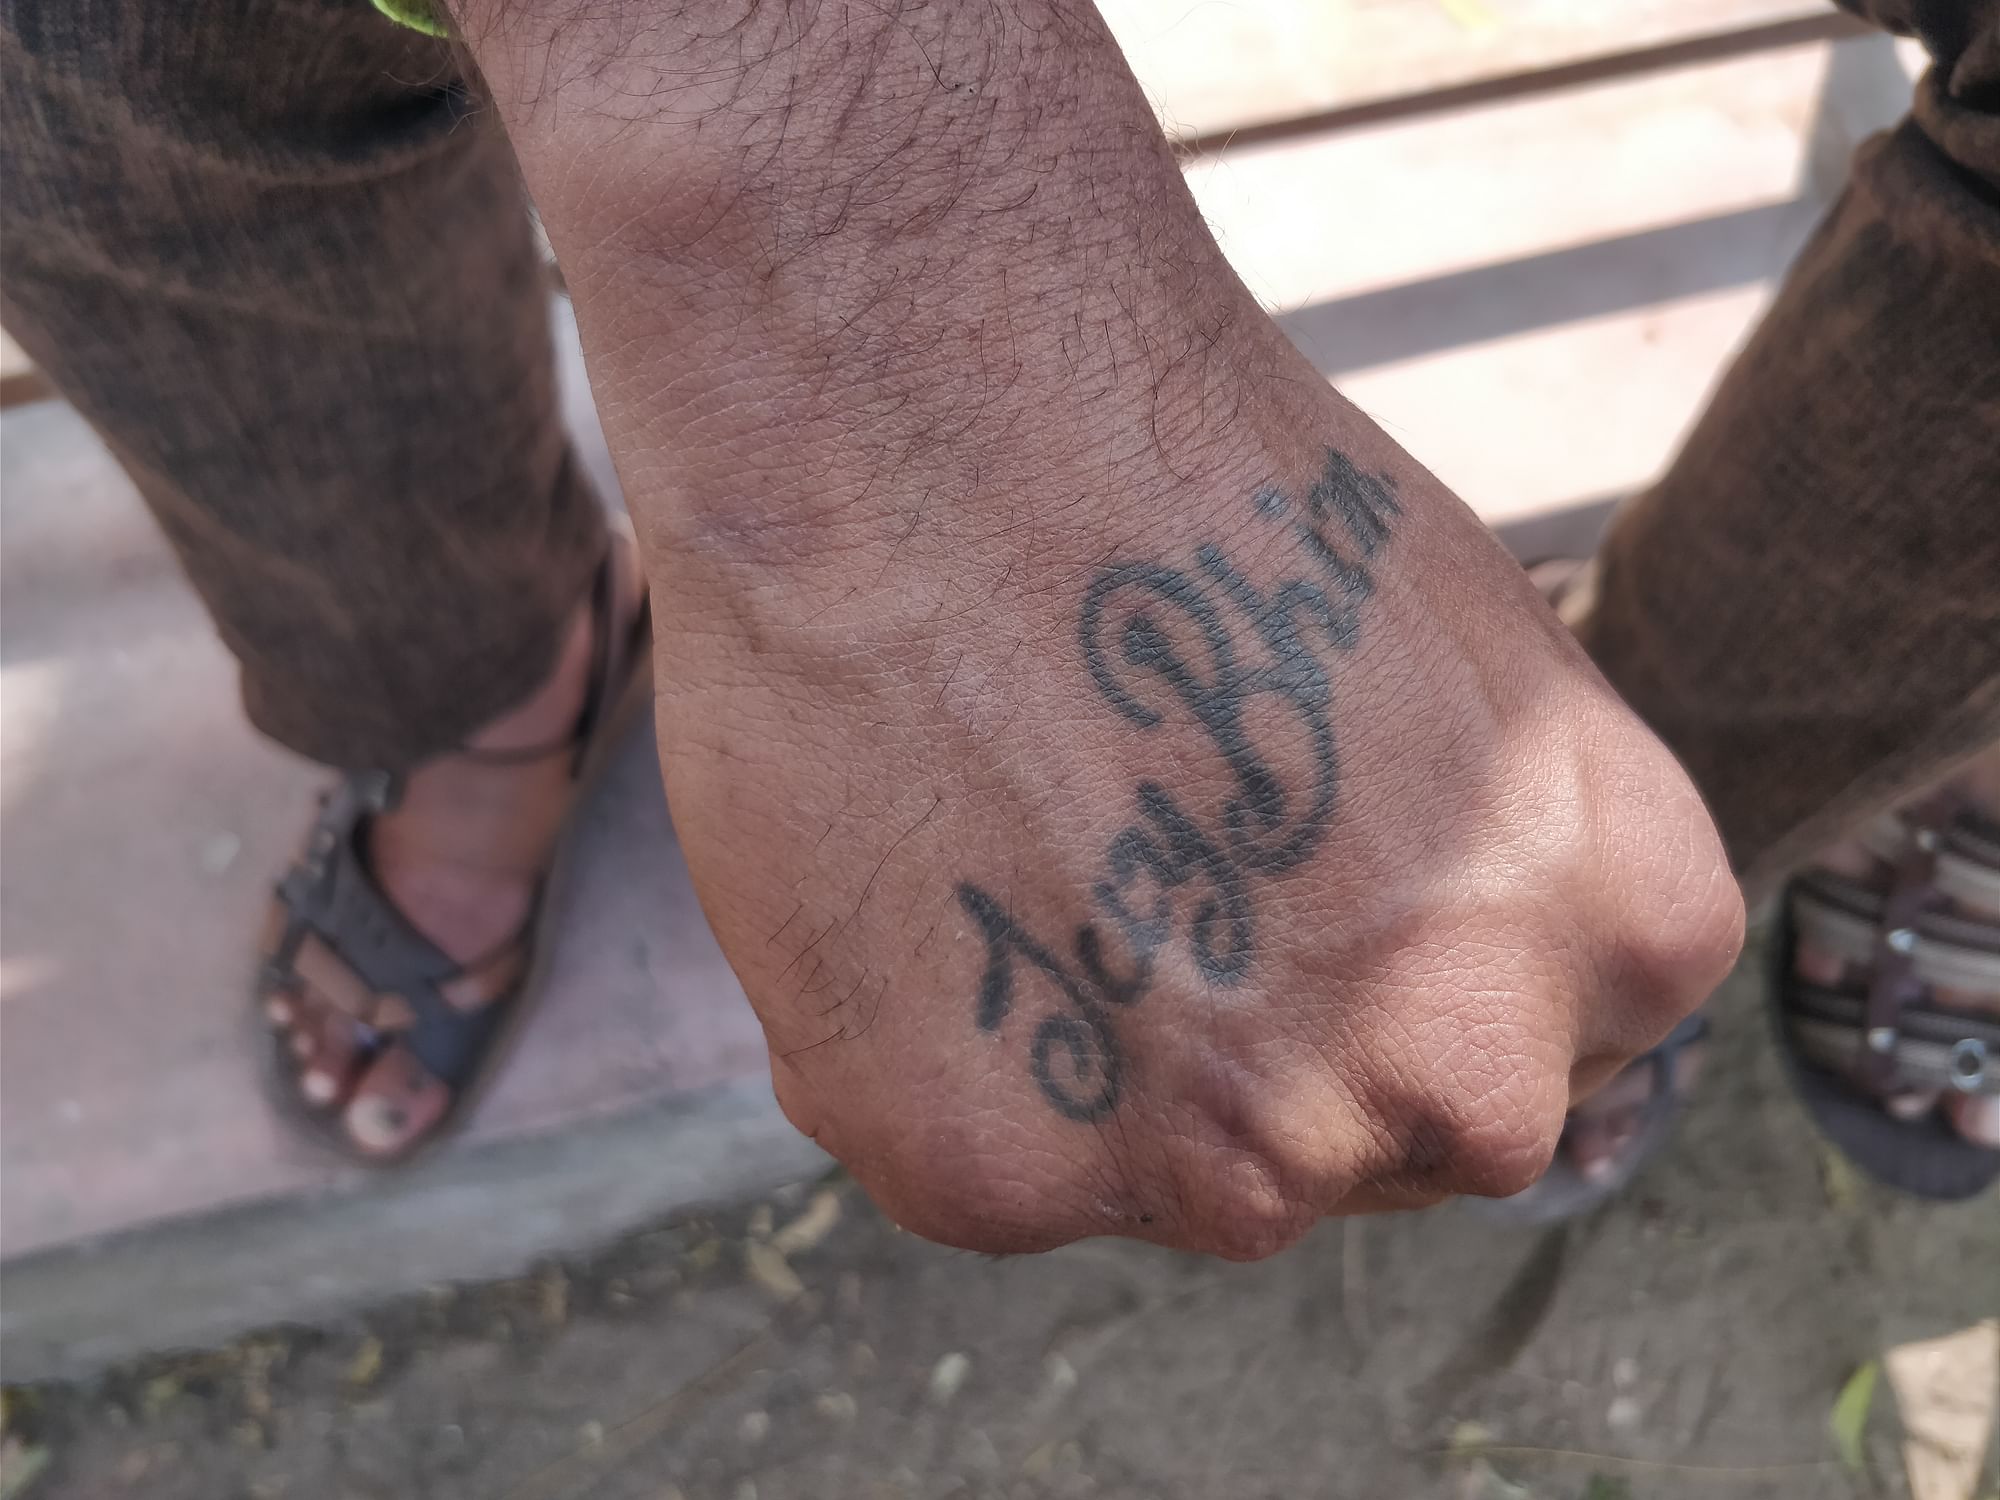 Details more than 66 jai bhim tattoo  thtantai2